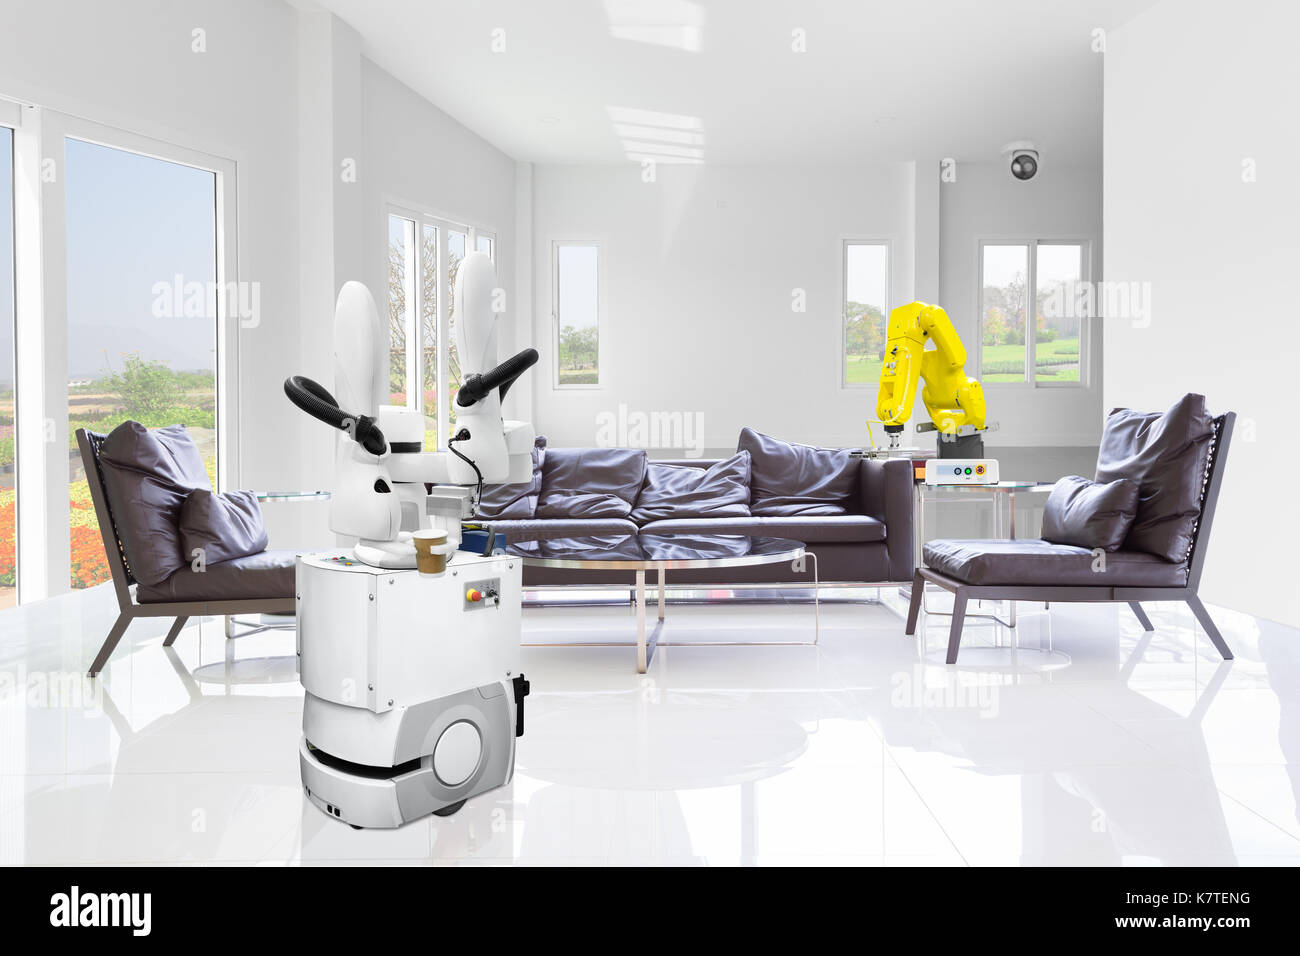 Automatische mobile Roboter Getränke in Smart Home, Technik 4.0 Konzept Stockfoto